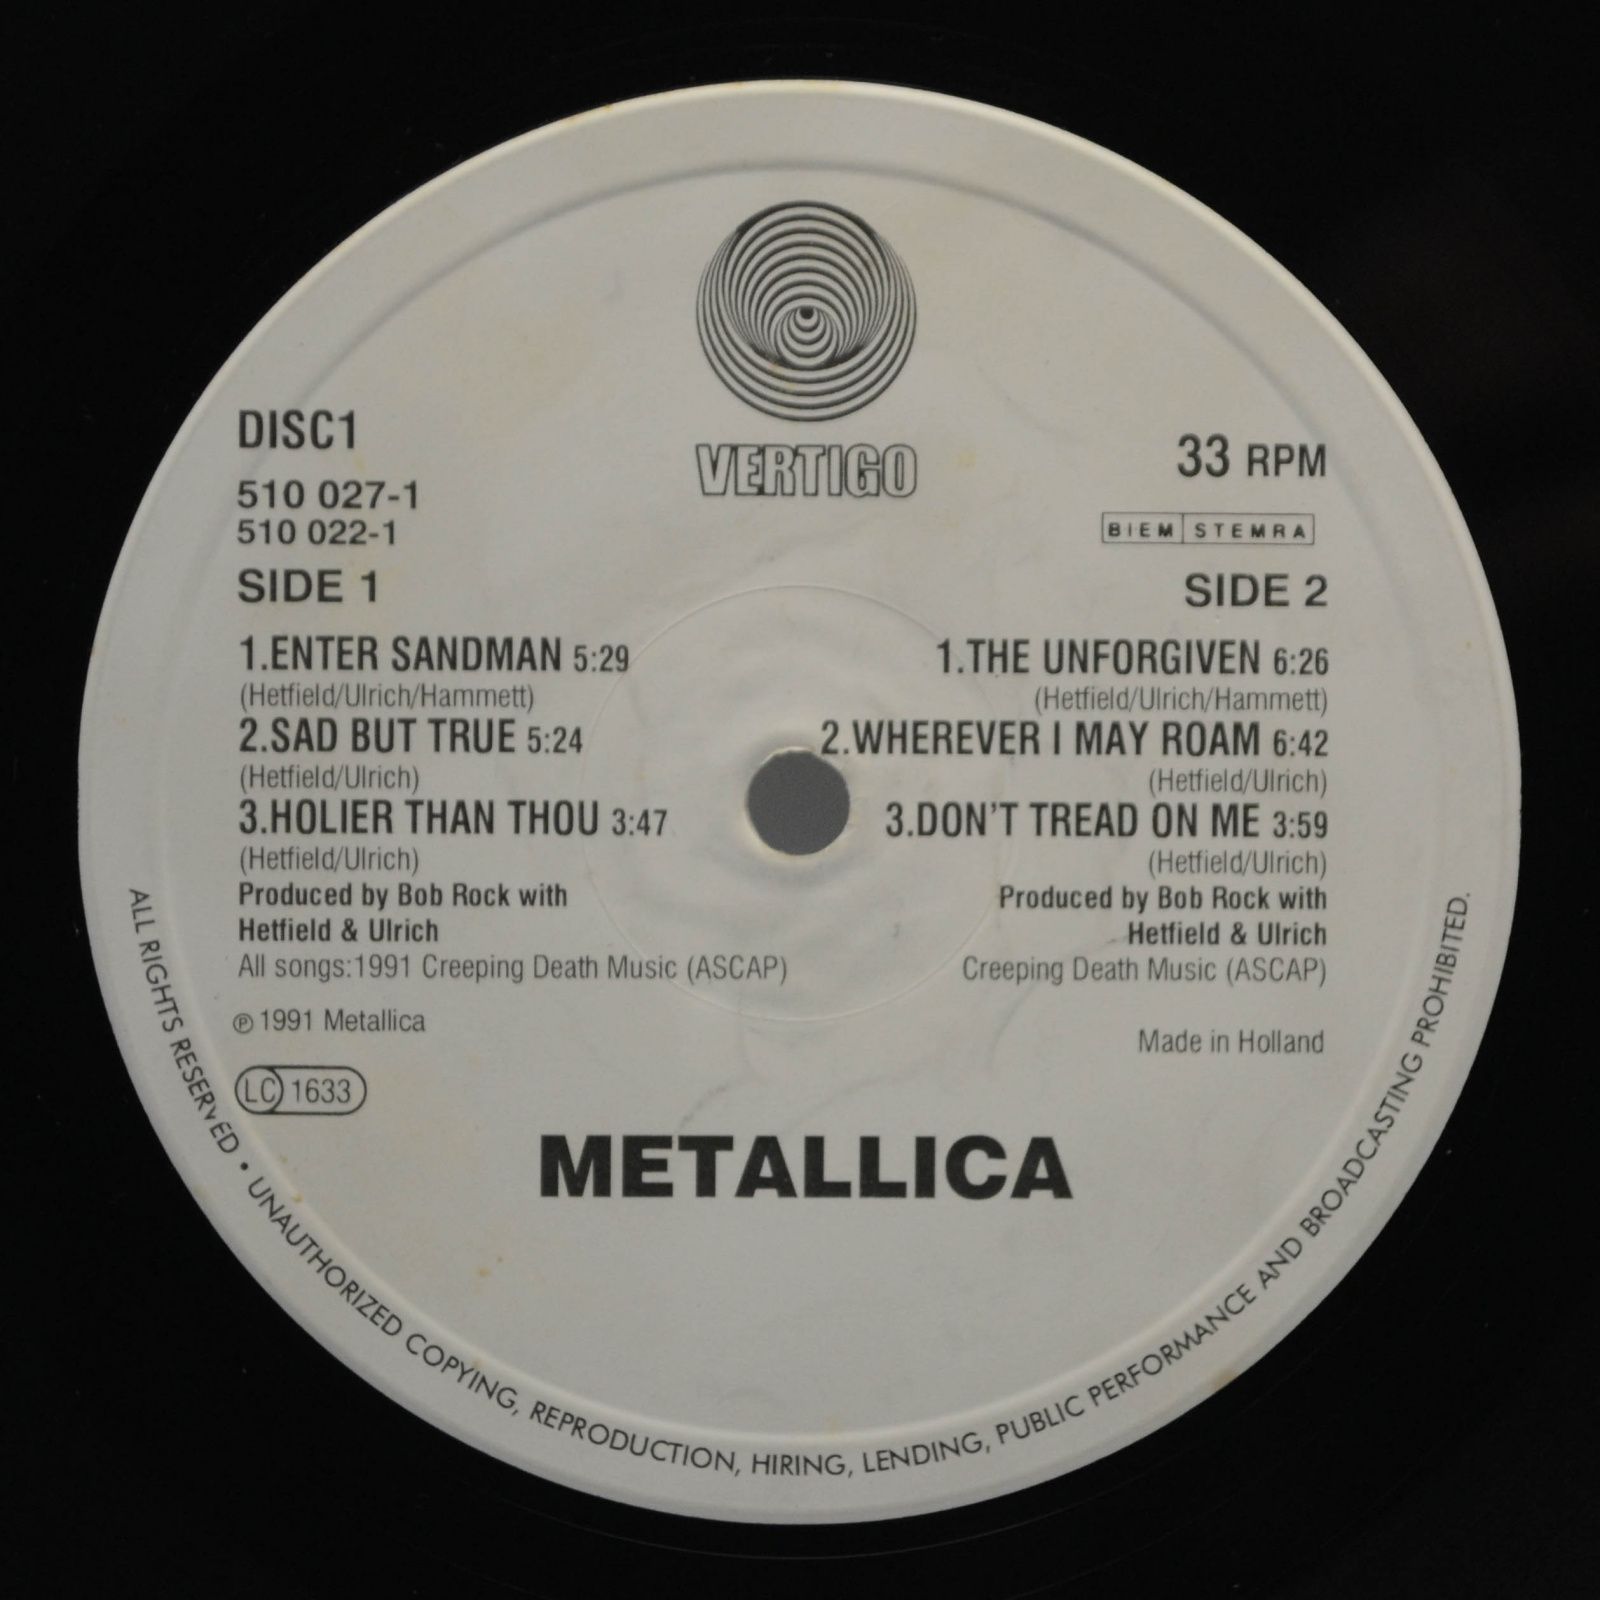 Metallica — Metallica (2LP), 1991